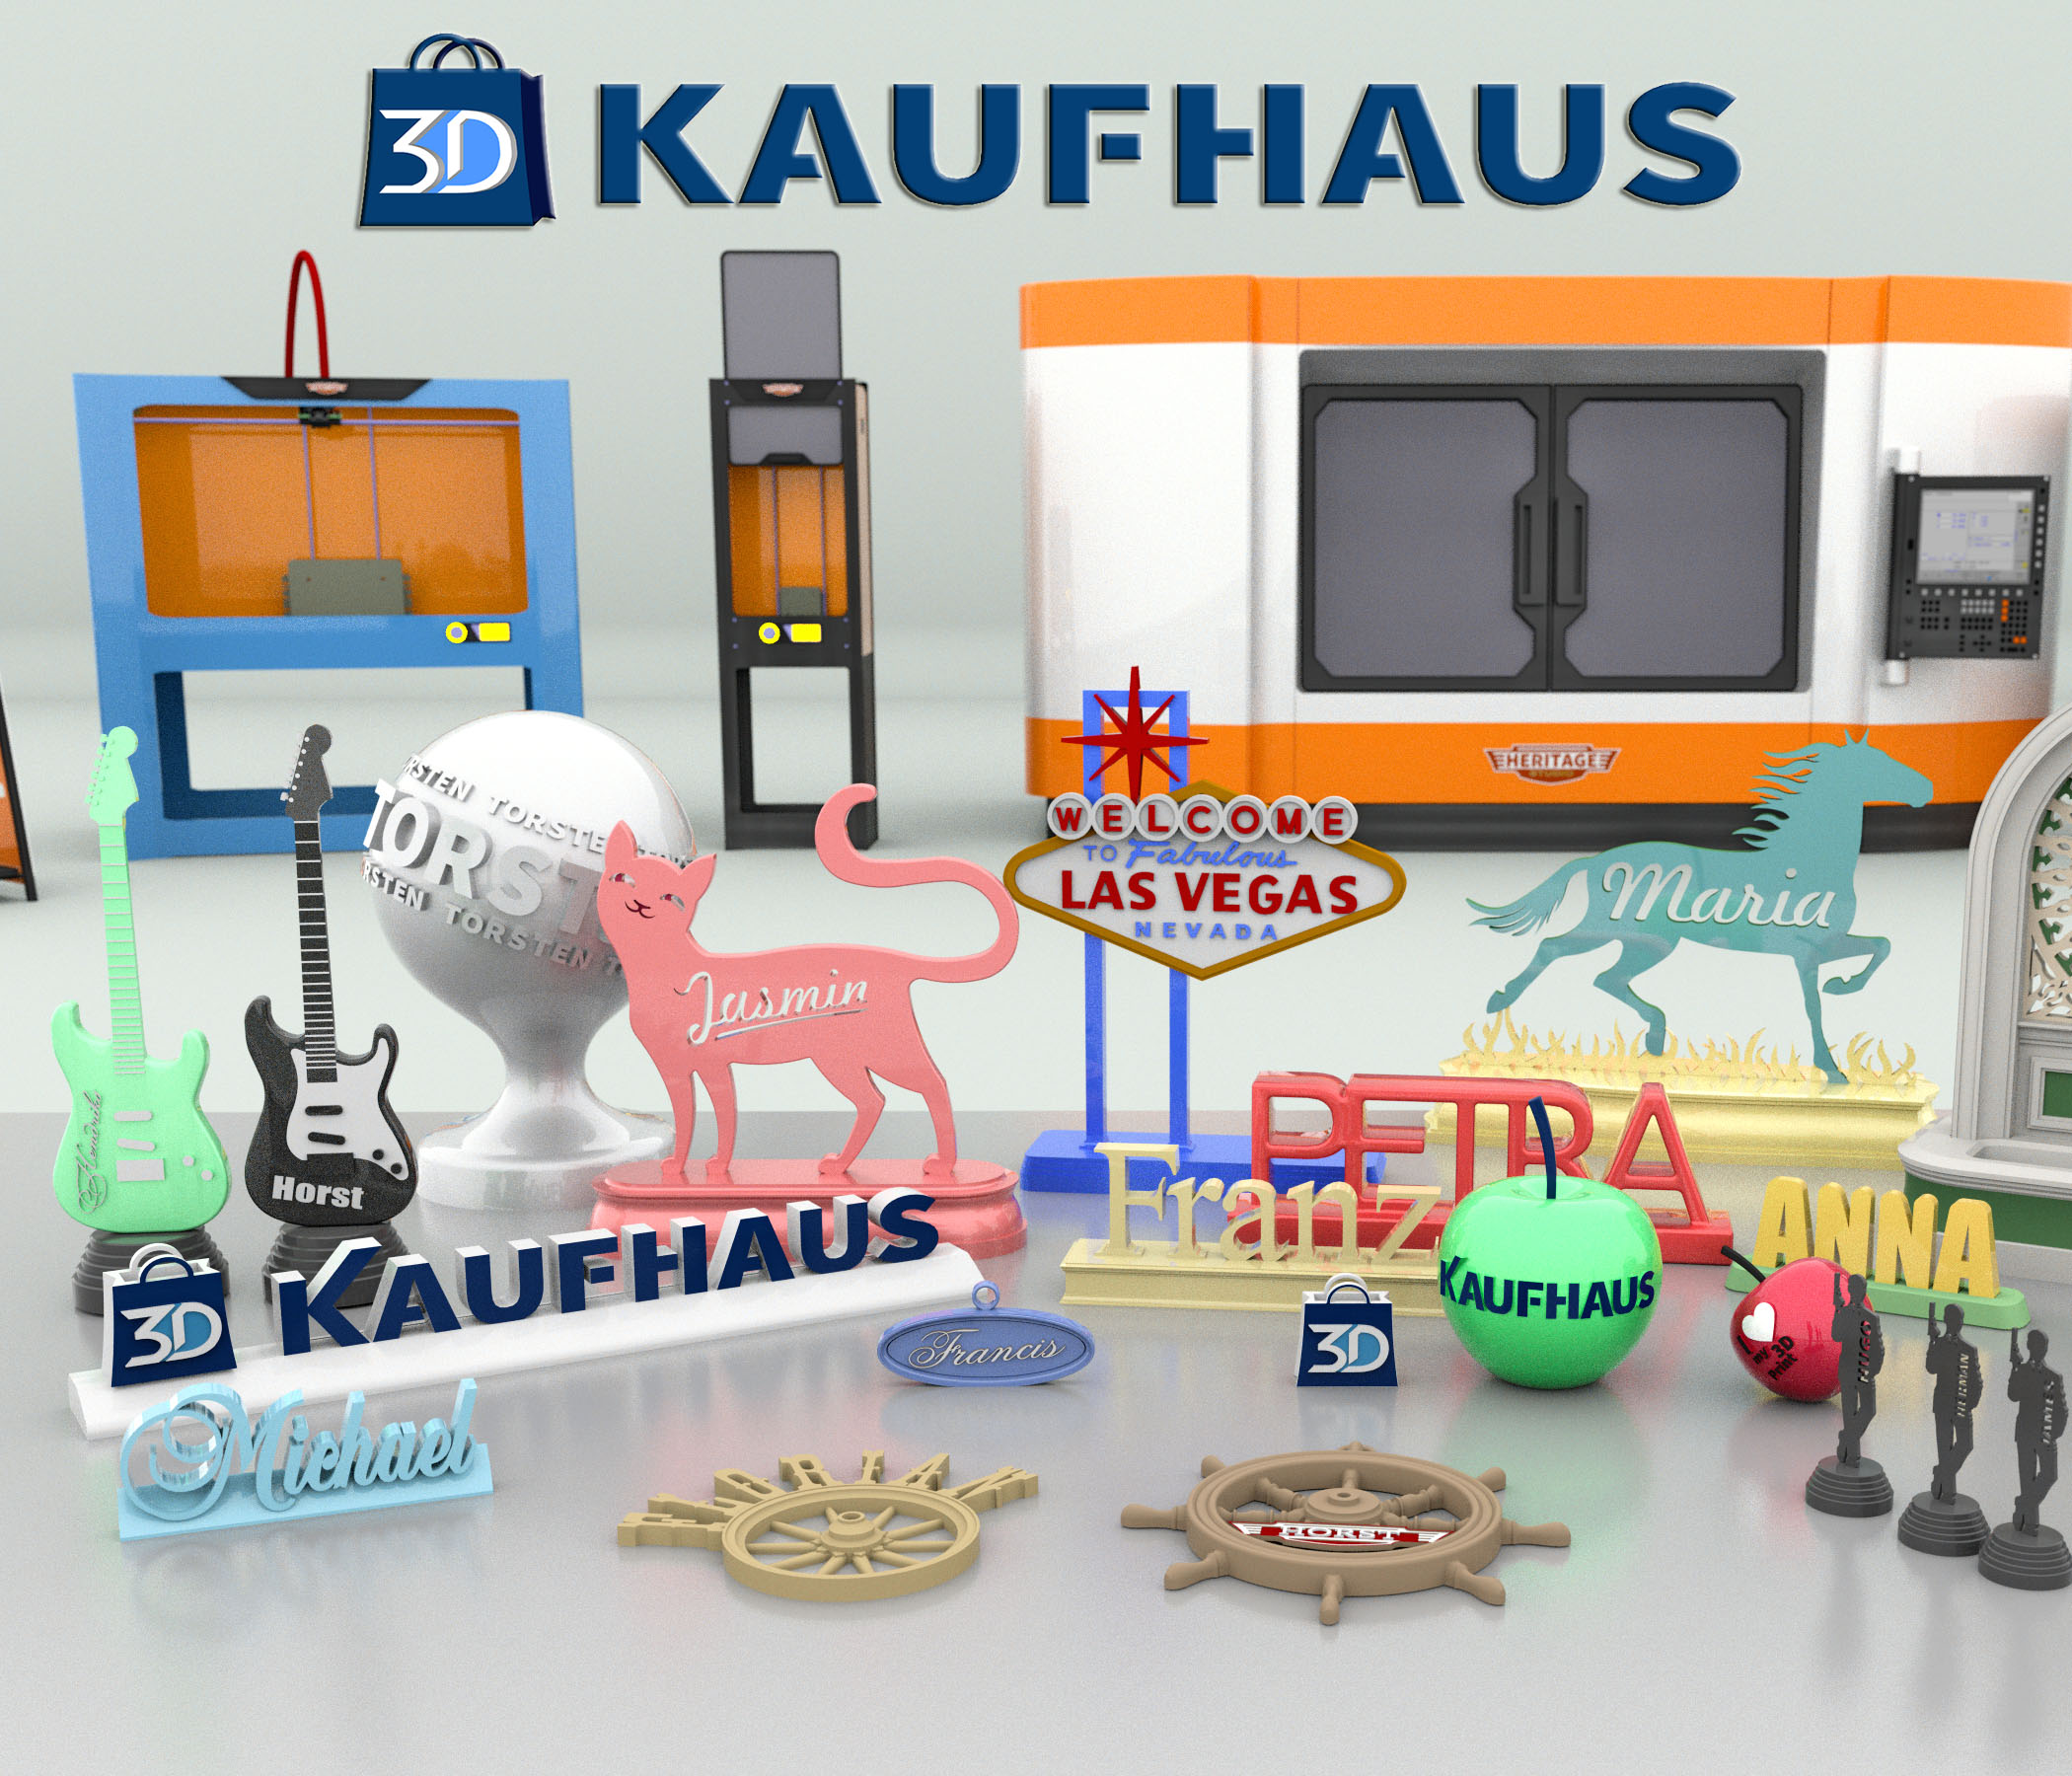 3D-Kaufhaus-32